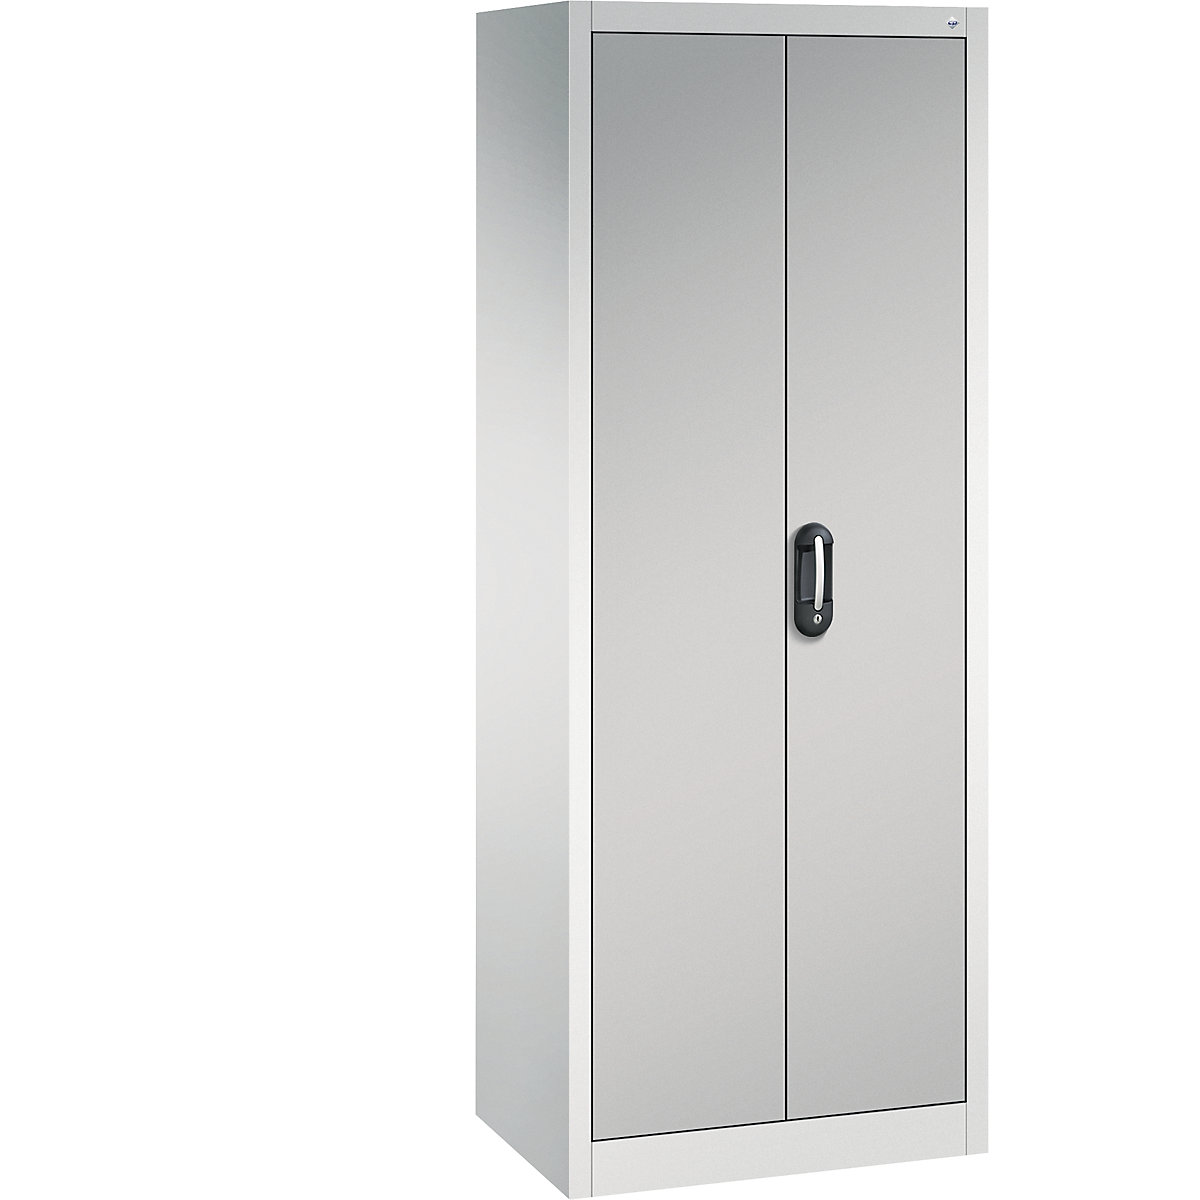 ACURADO universal cupboard – C+P, WxD 700 x 500 mm, light grey / white aluminium-17